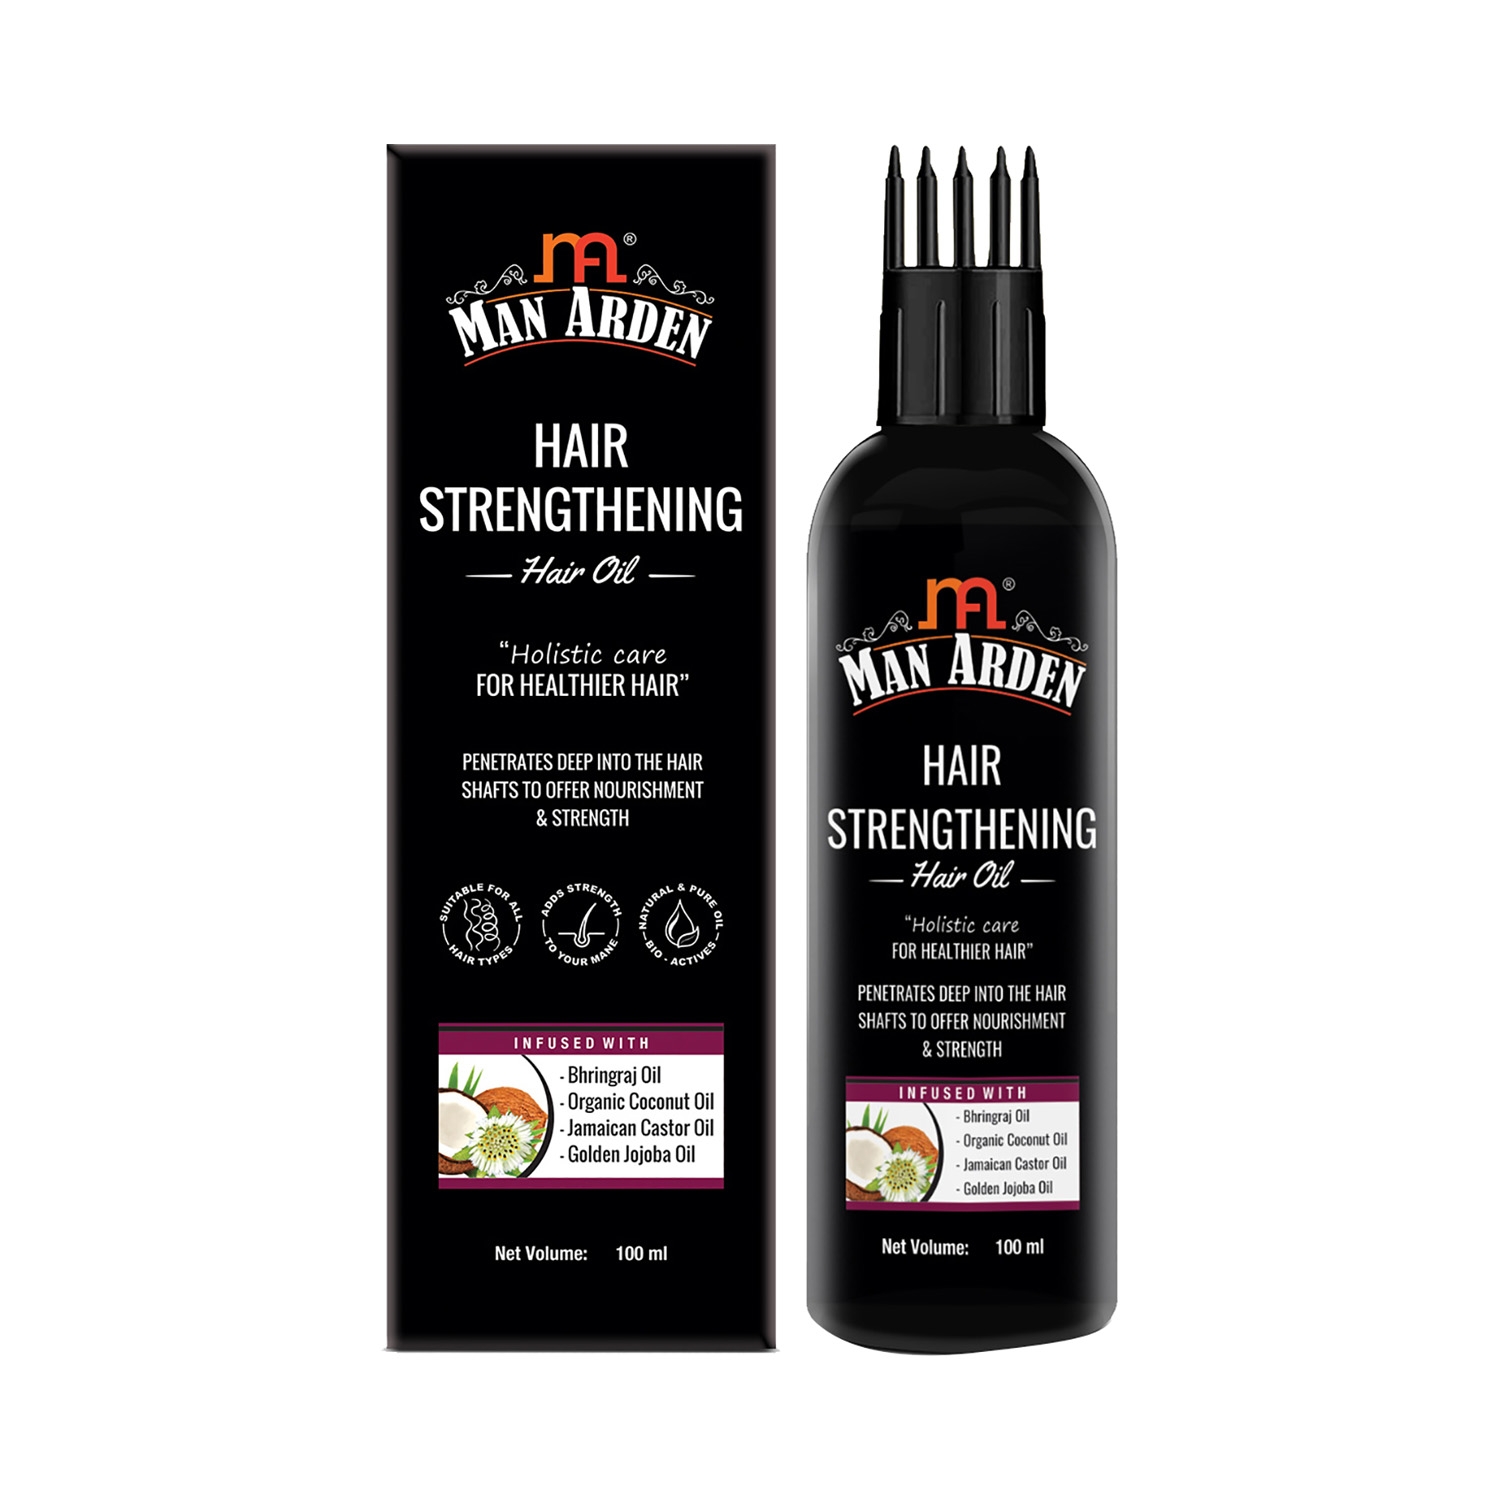 Man Arden Hair Strengthening Hair Oil With Comb Applicator For Nourishment & Strength (100ml)